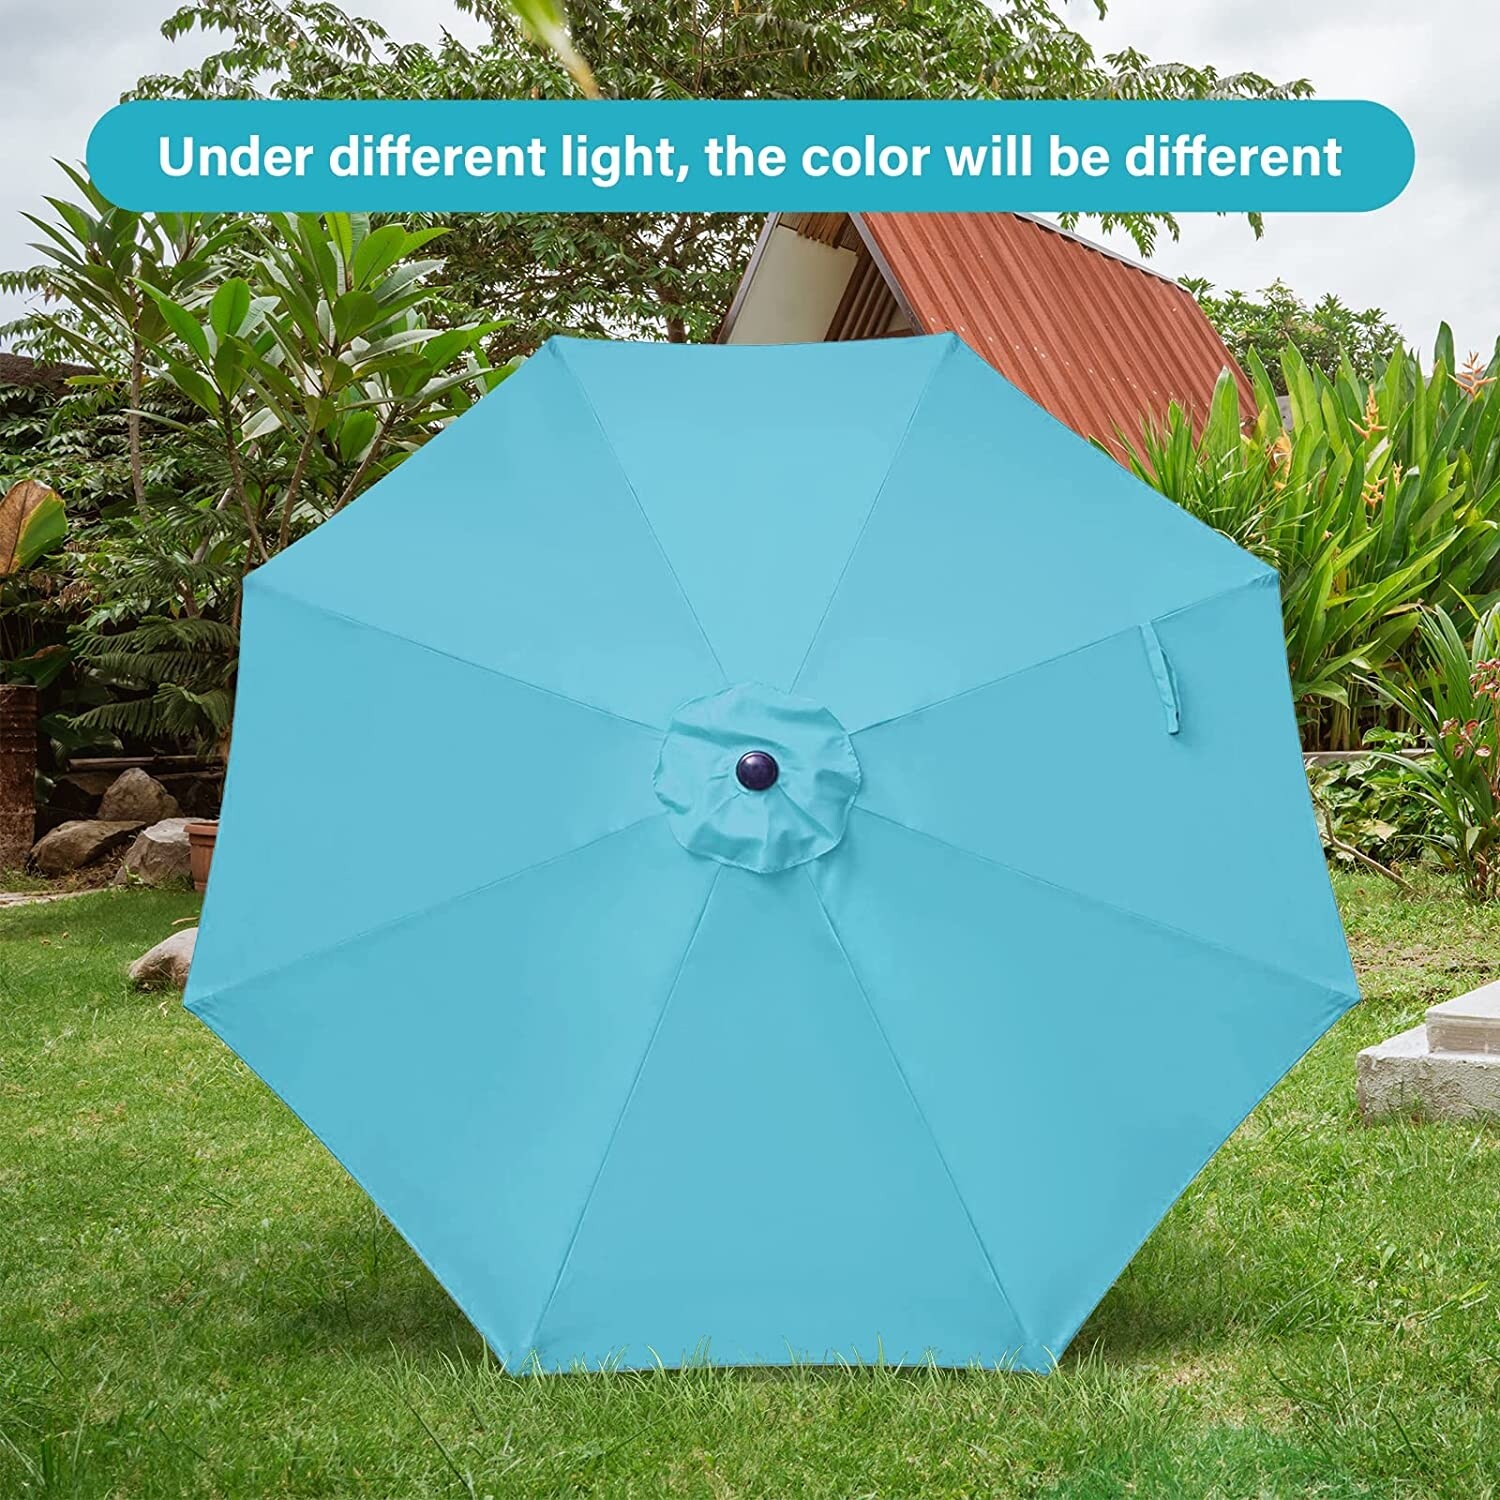 Simple Deluxe 9' Outdoor Patio Umbrella with Push Button Tilt/Crank, 8 Sturdy Ribs for Garden, Backyard, Pool